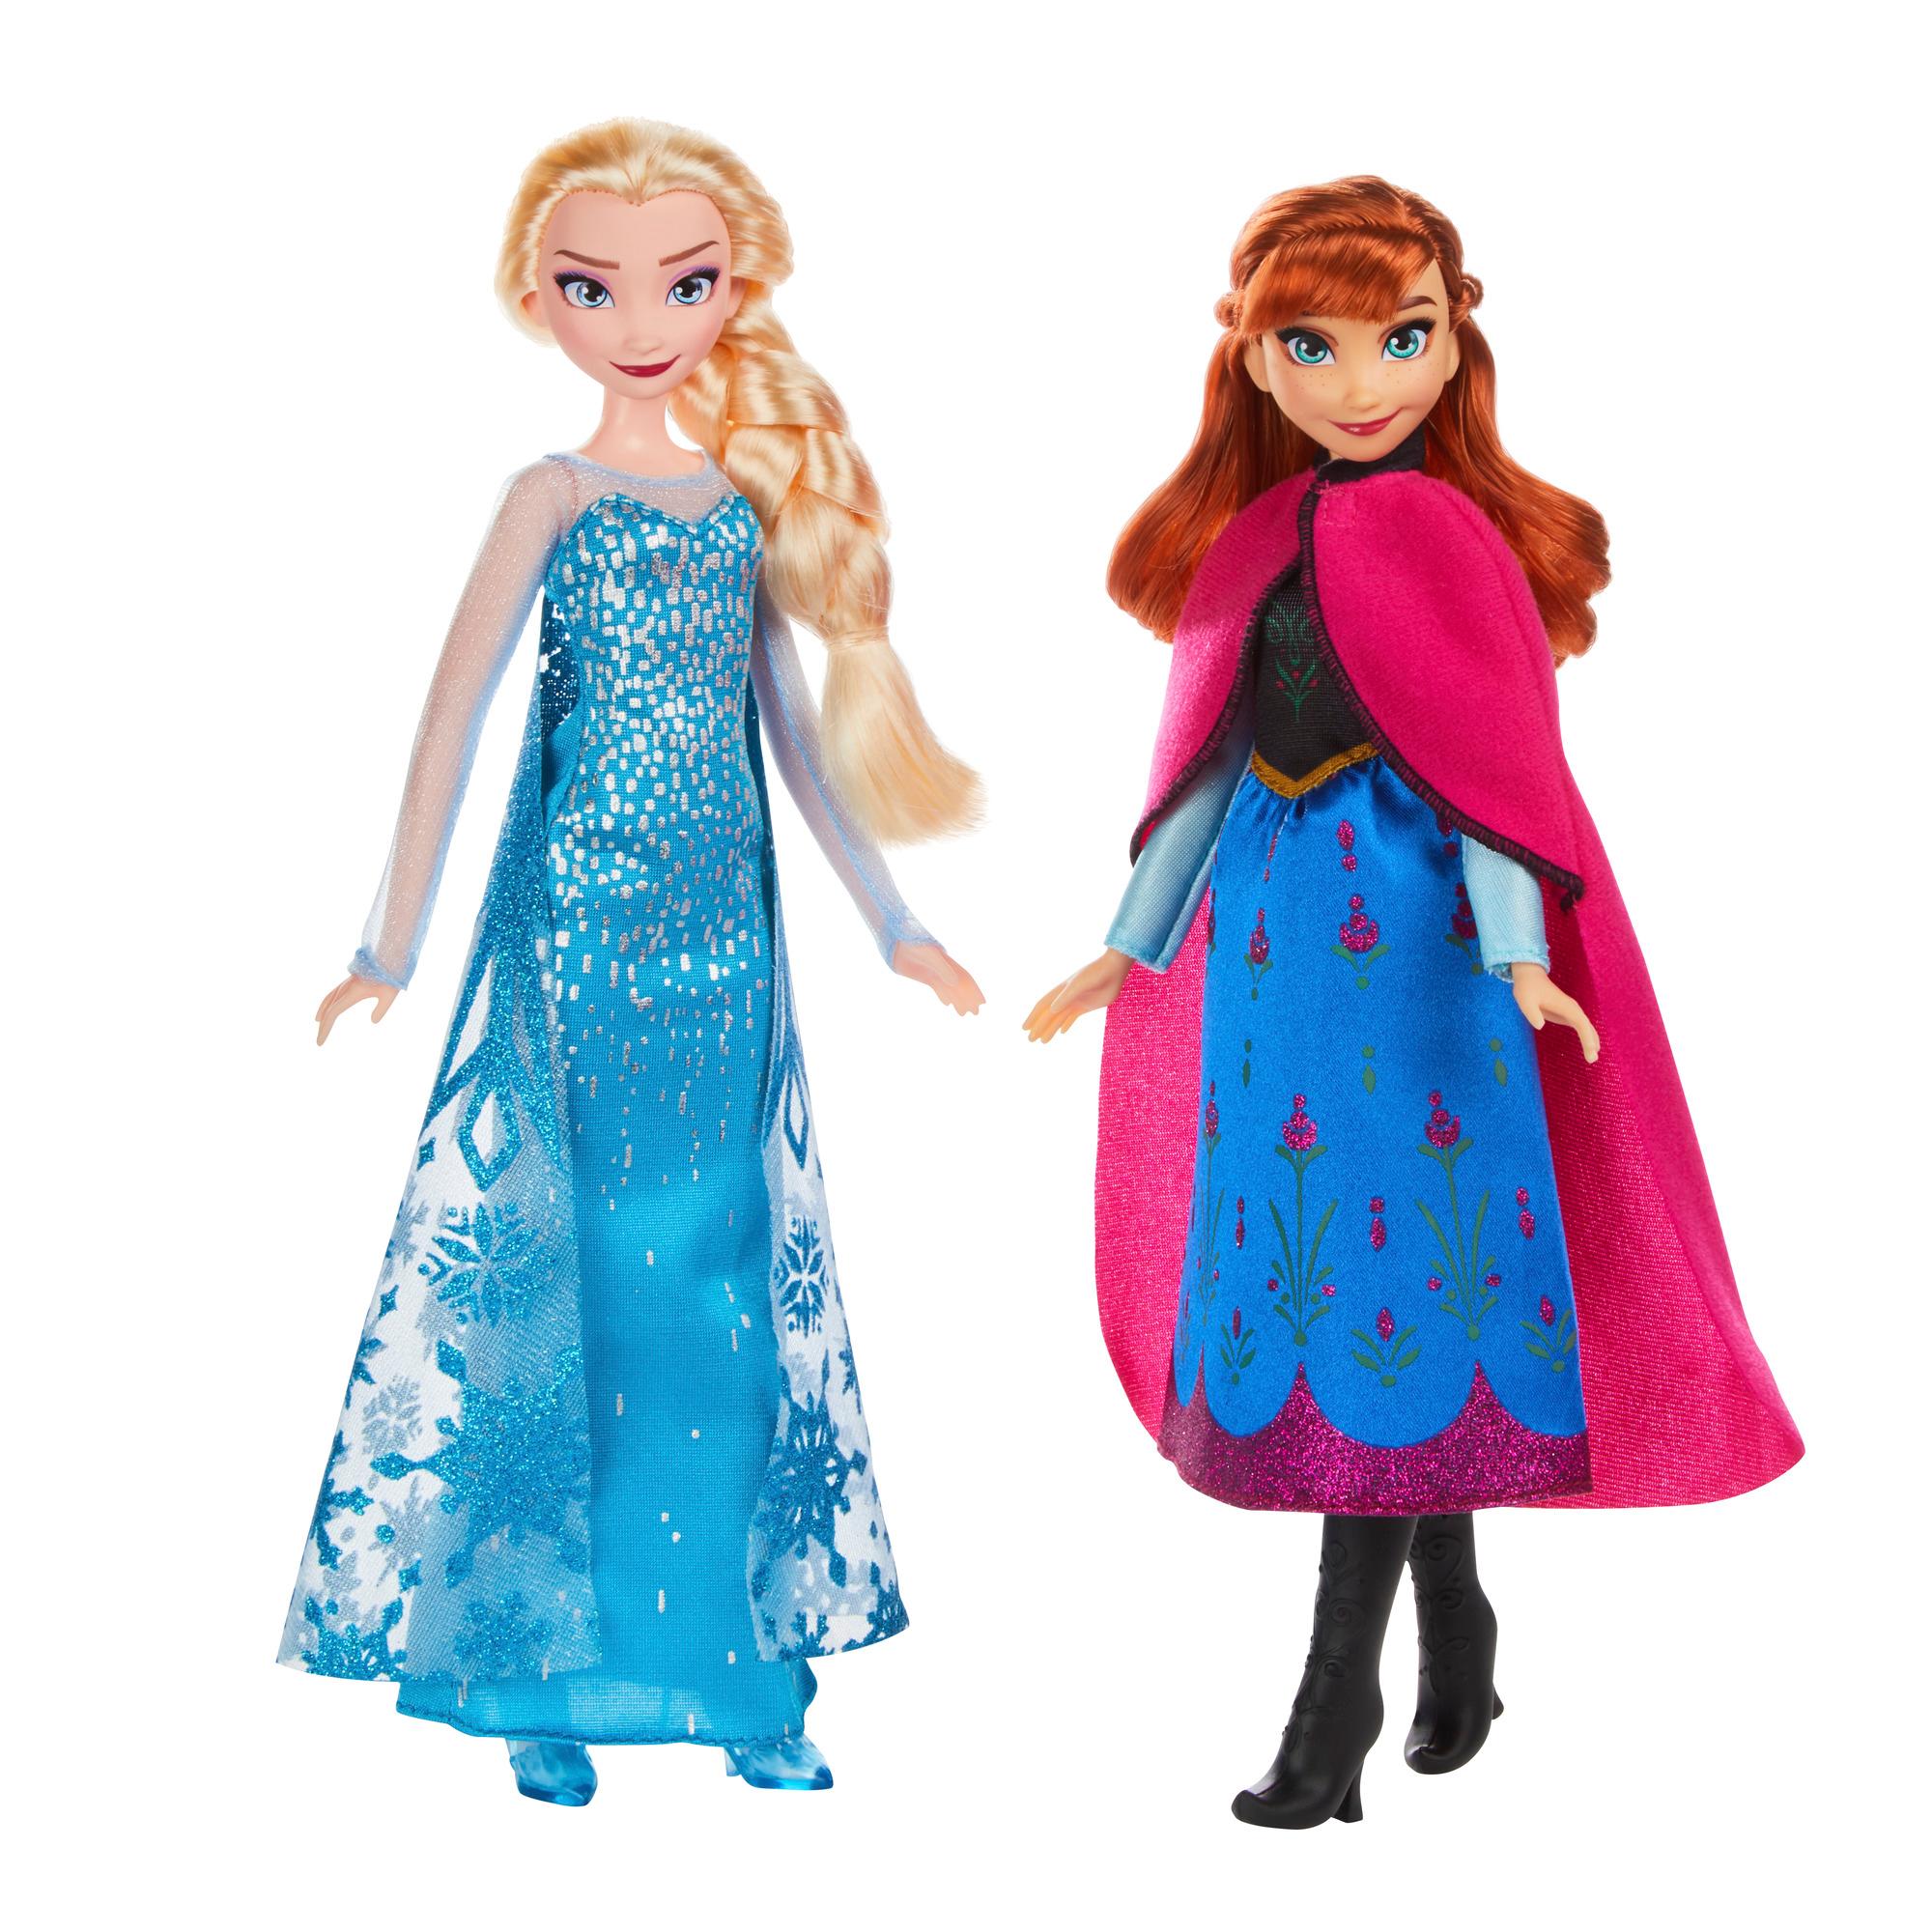 Baby Anna And Elsa Dolls Shop Now, Save 63% | jlcatj.gob.mx